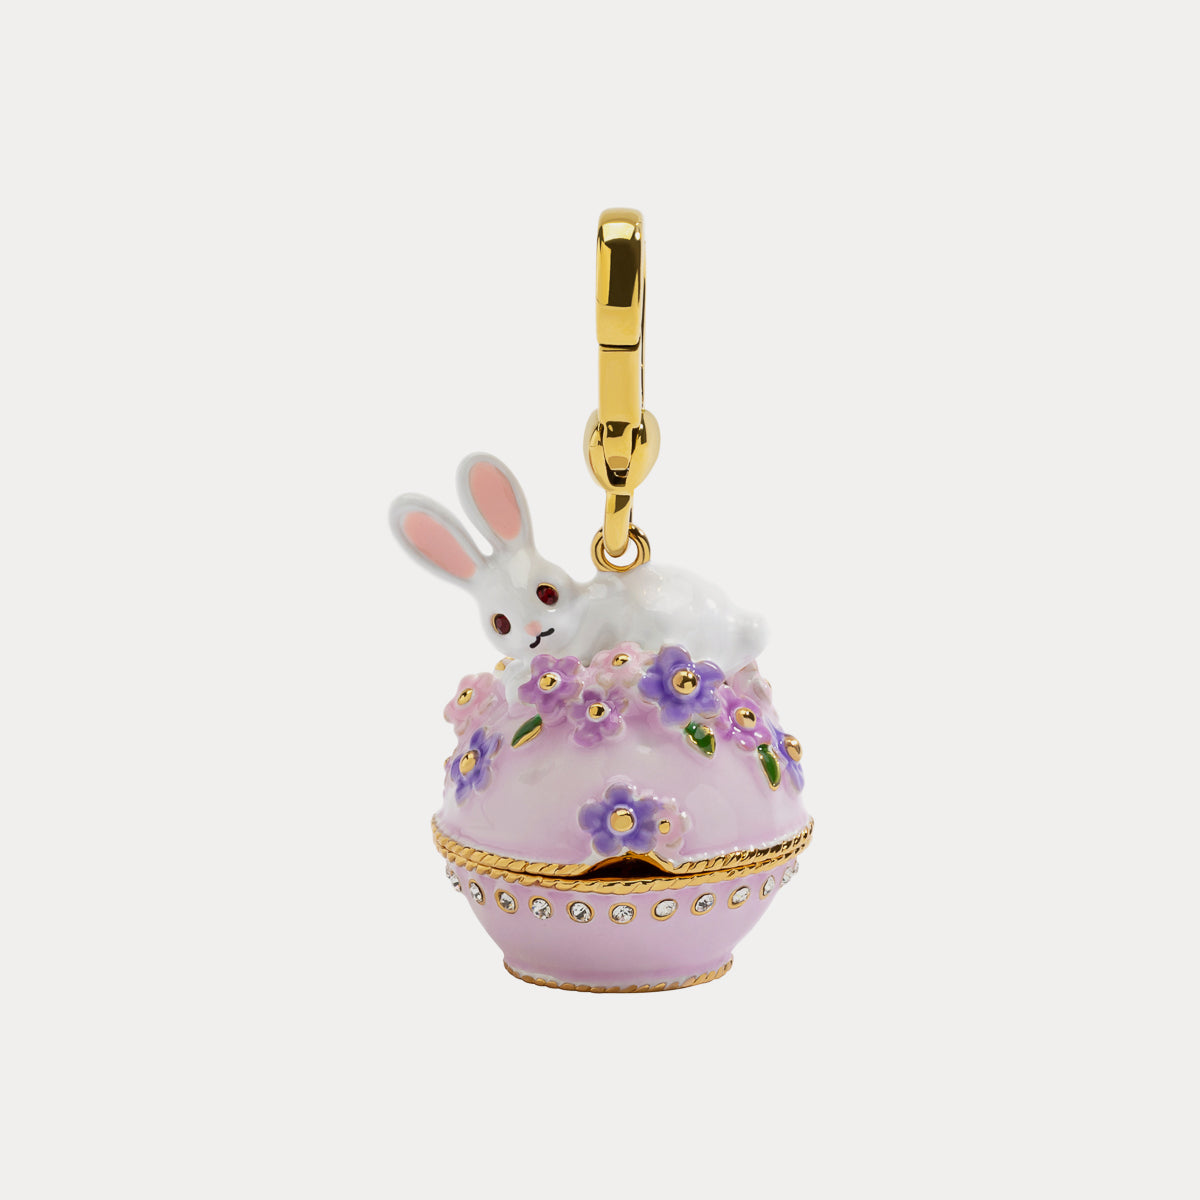 Enamel rabbit flower box pendant necklace